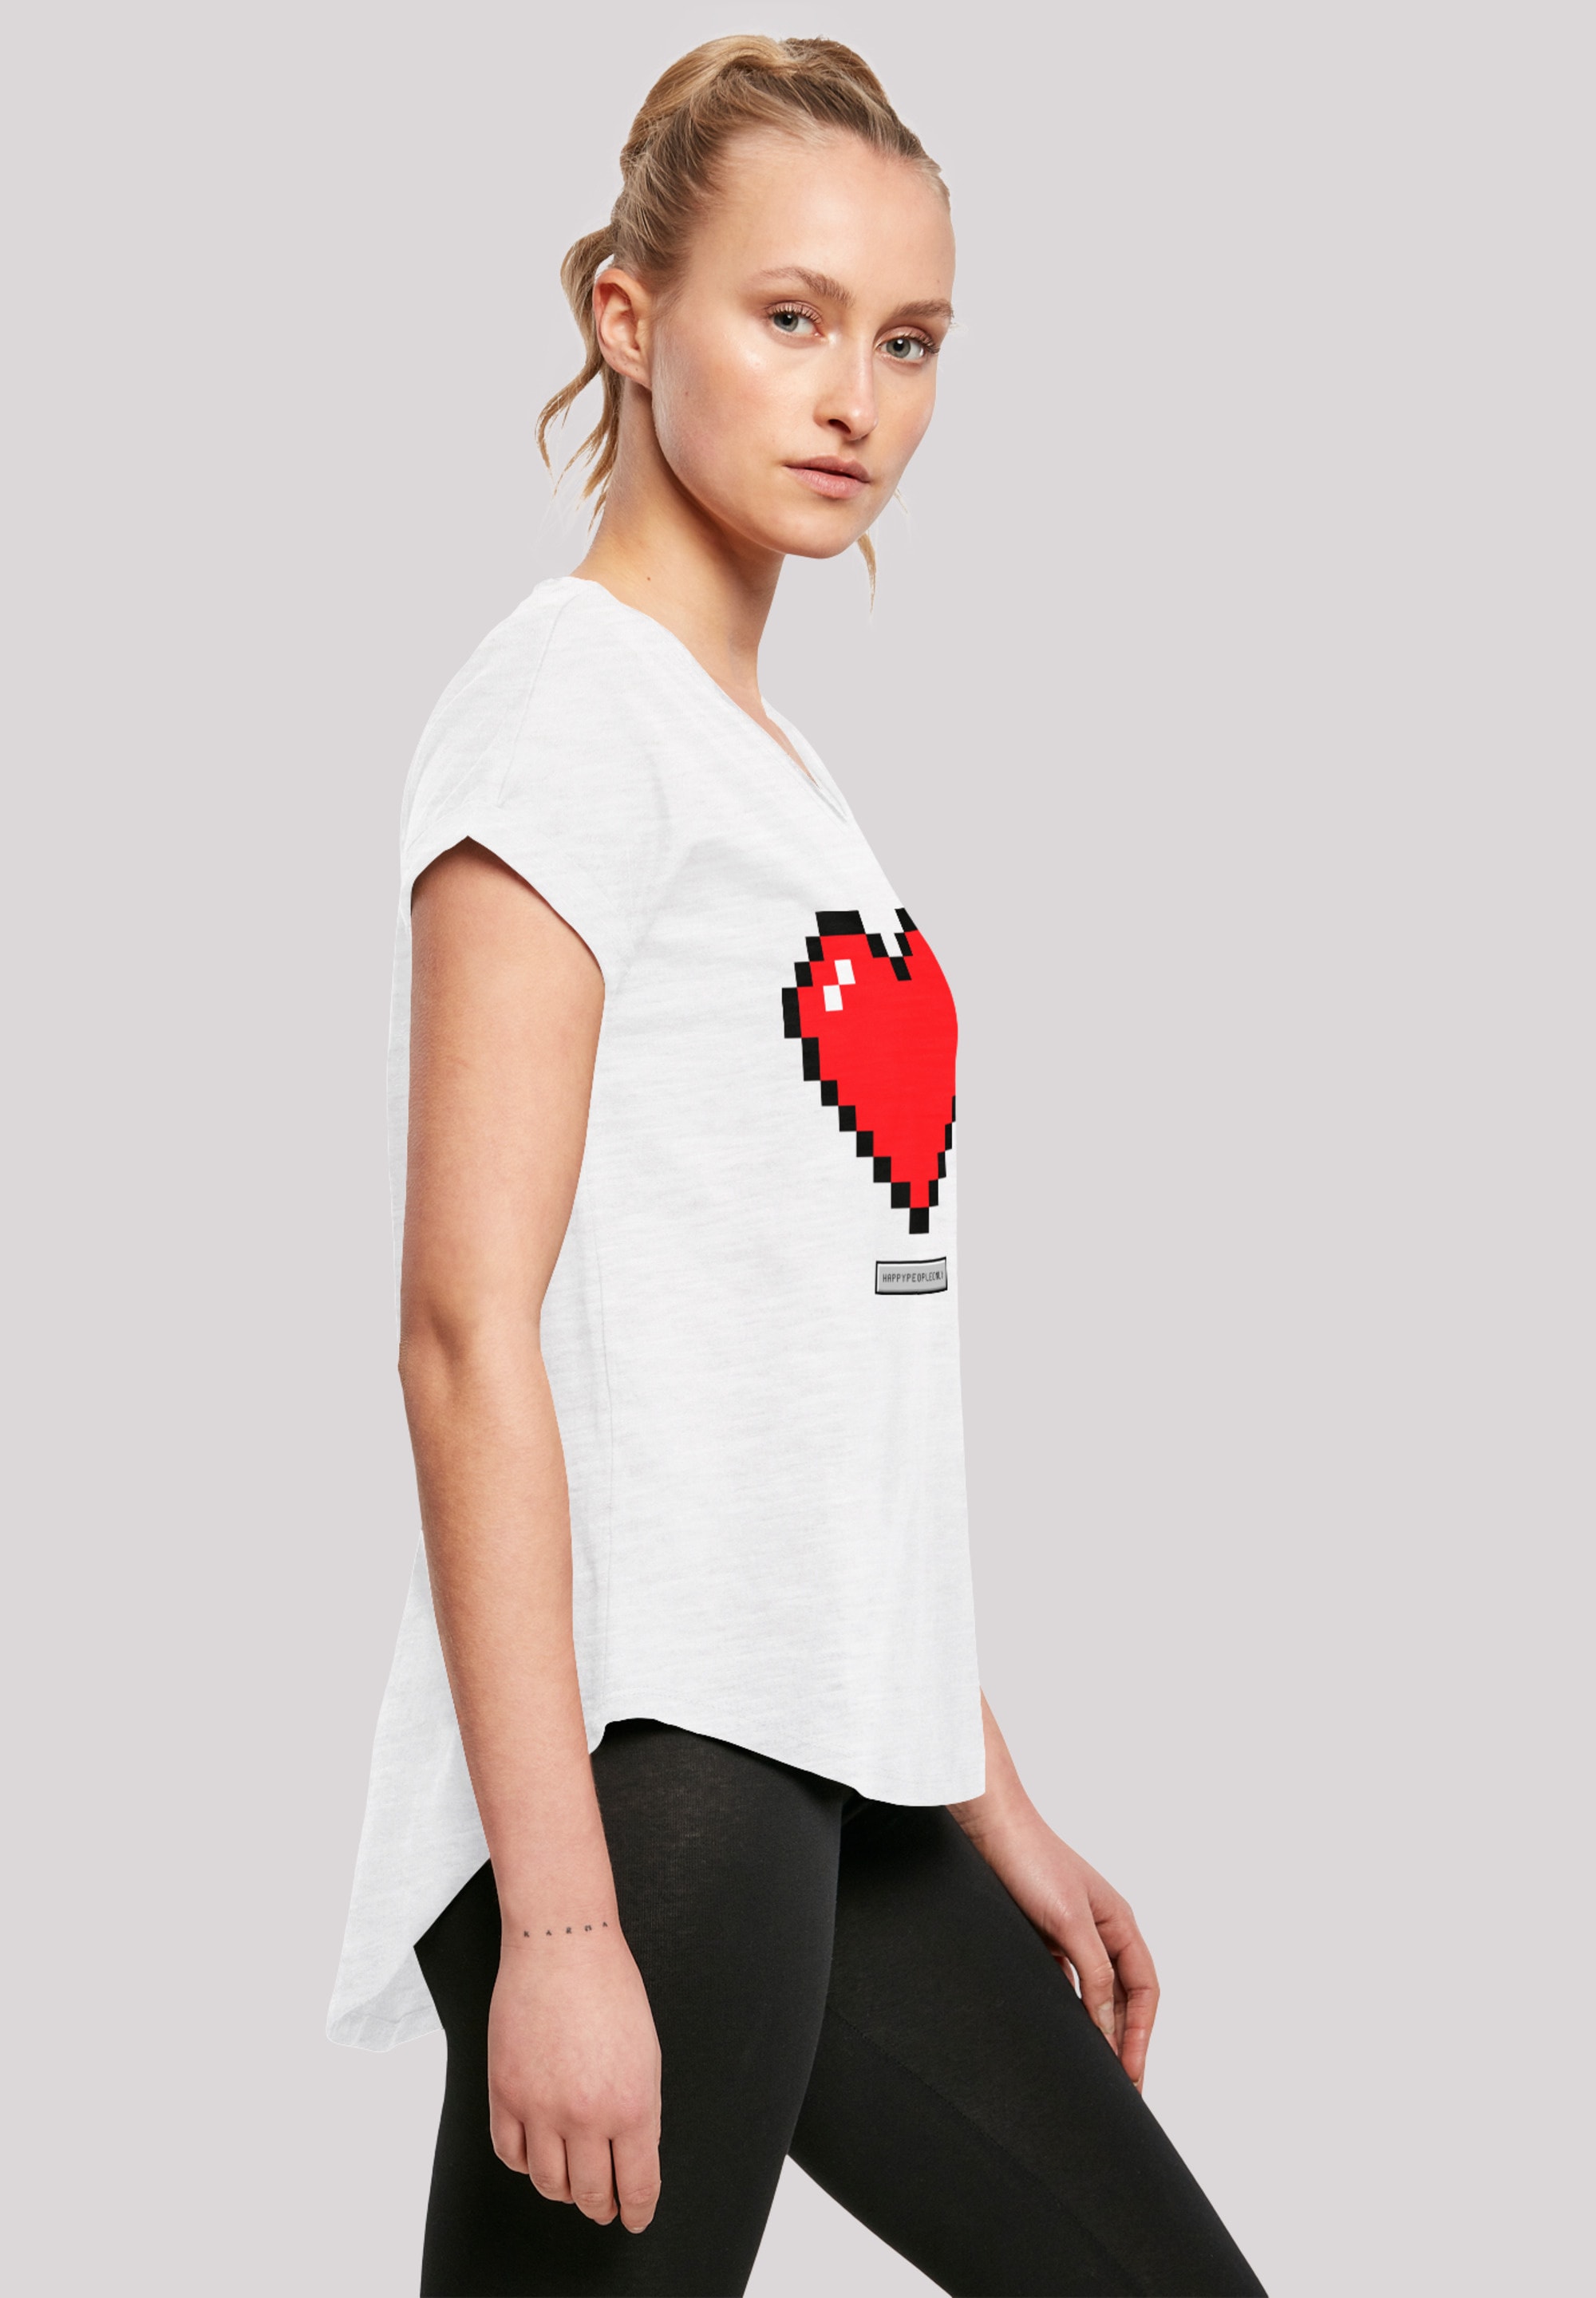 bestellen Happy People«, T-Shirt Print Vibes Good »Pixel Herz F4NT4STIC